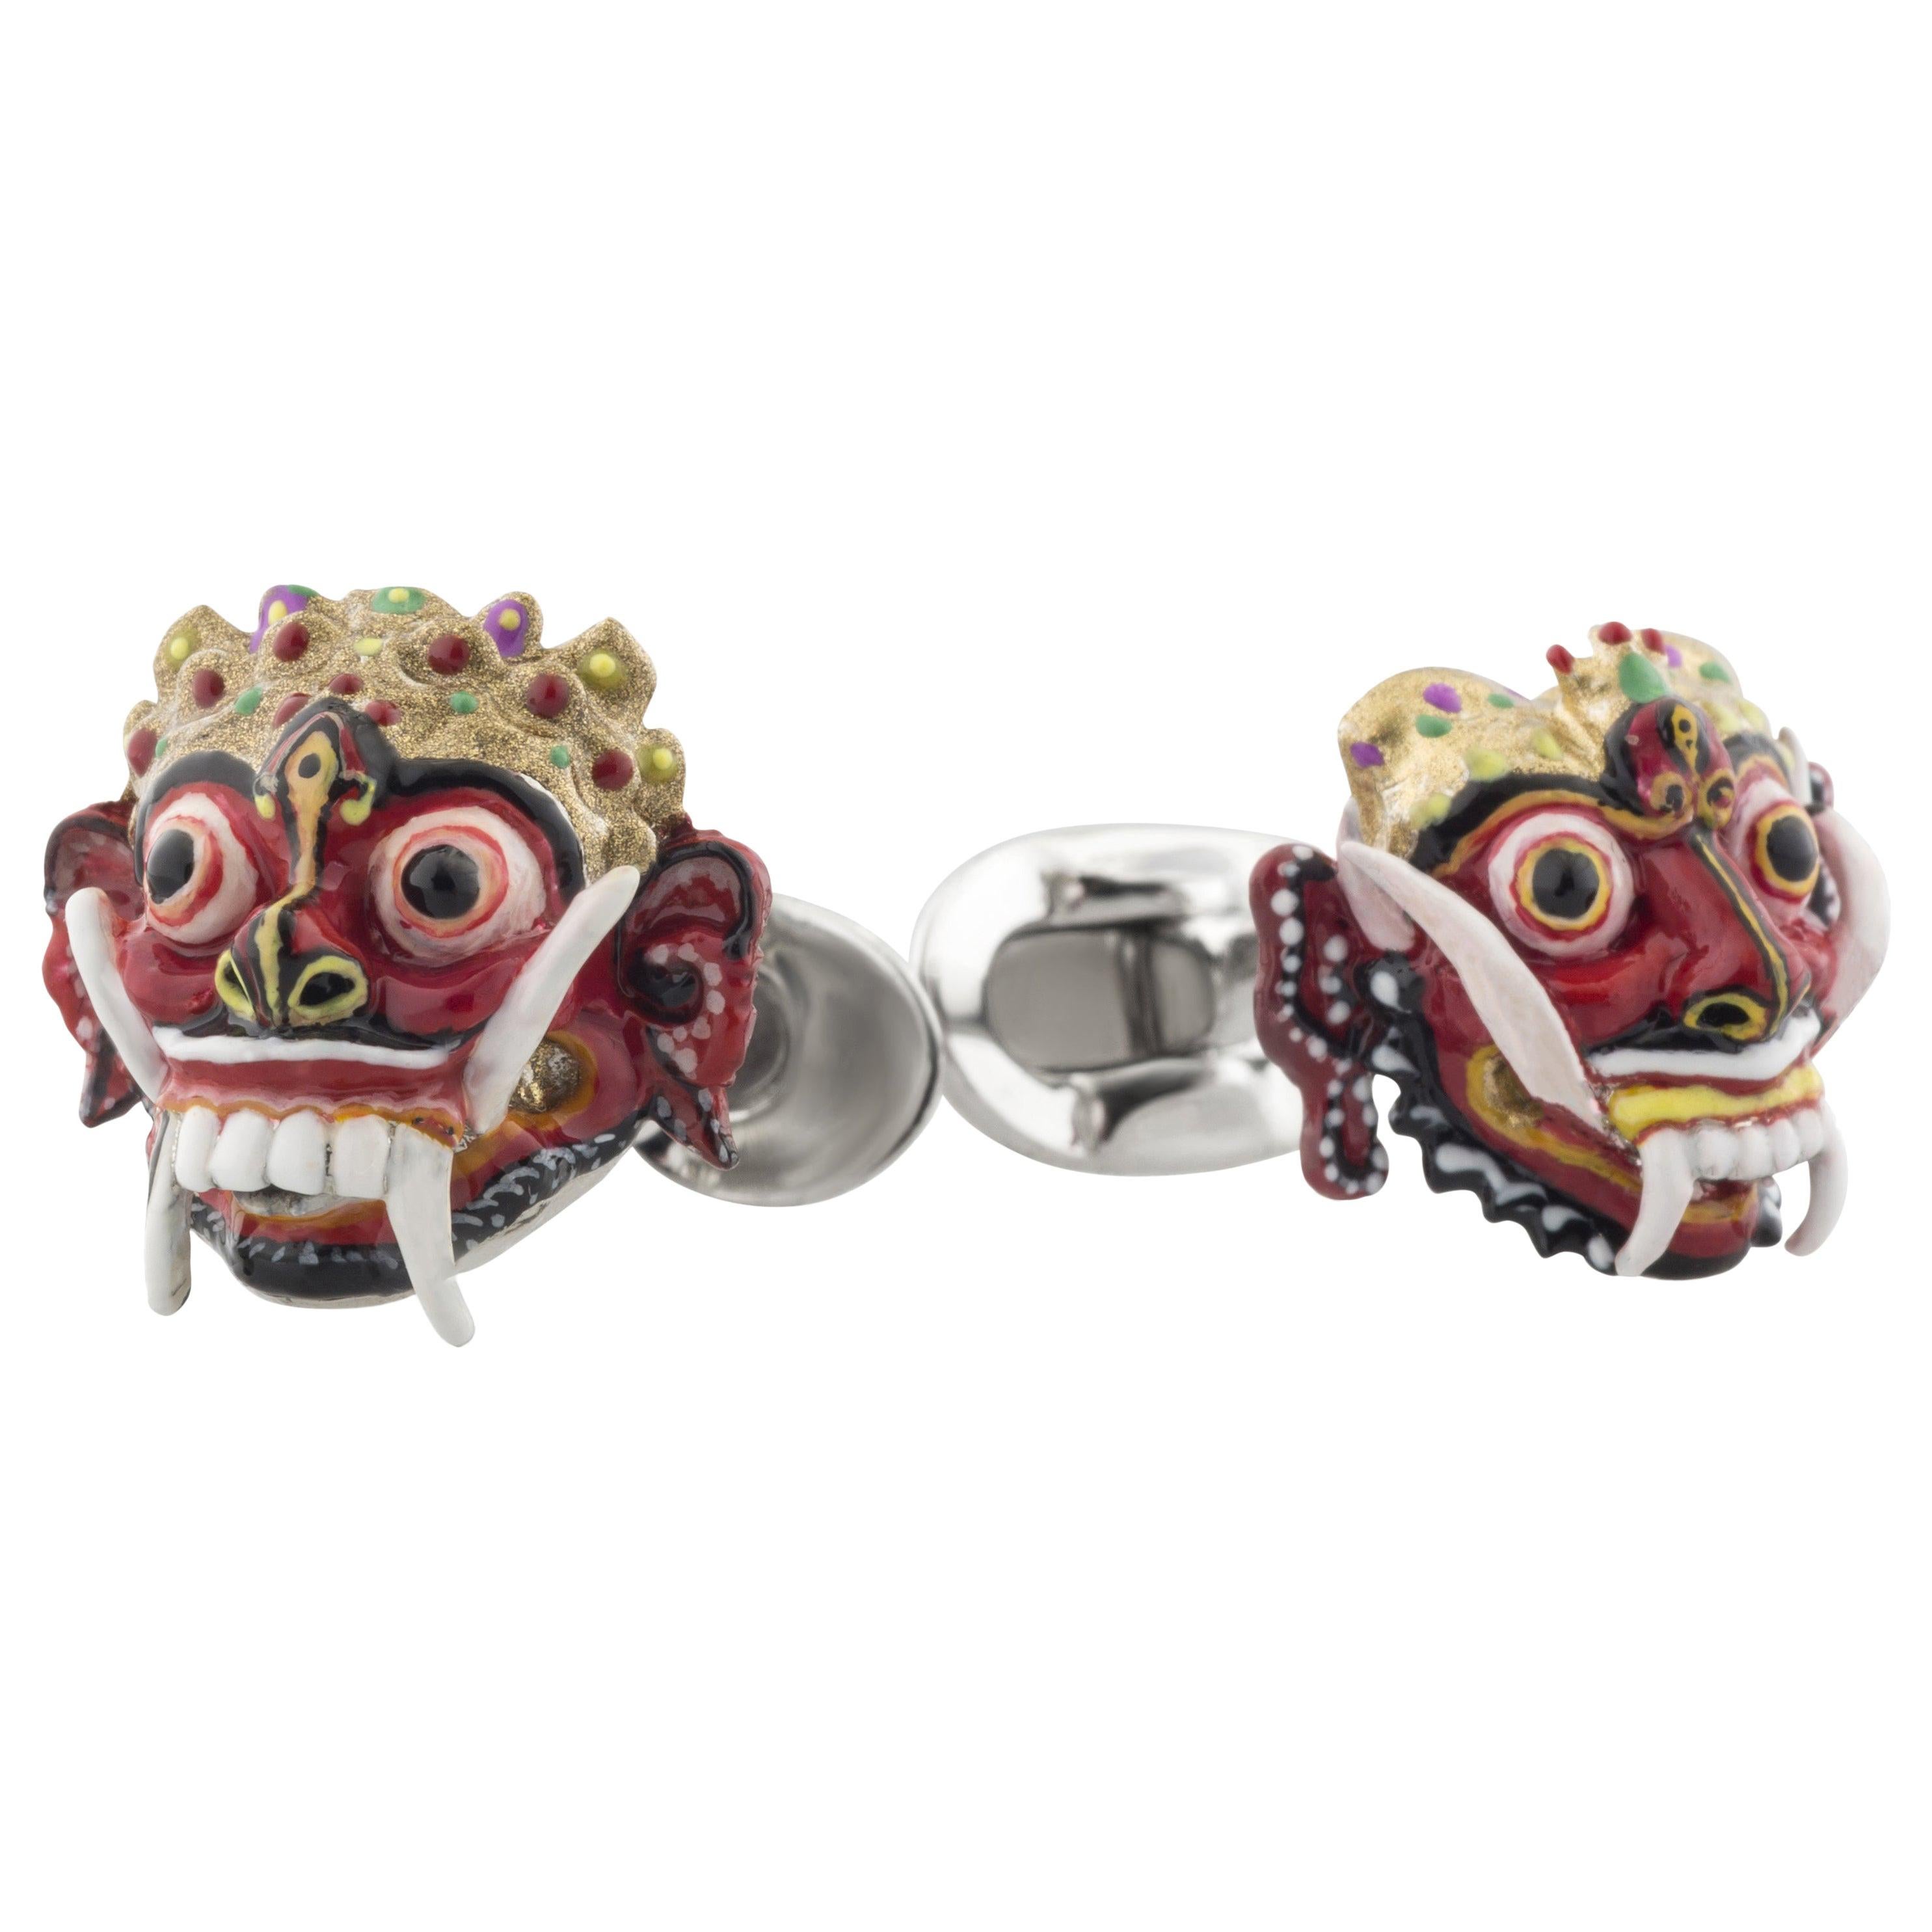 Balinese Masks of Barong and Rangda - Cufflinks in Hand-enameled Sterling Silver